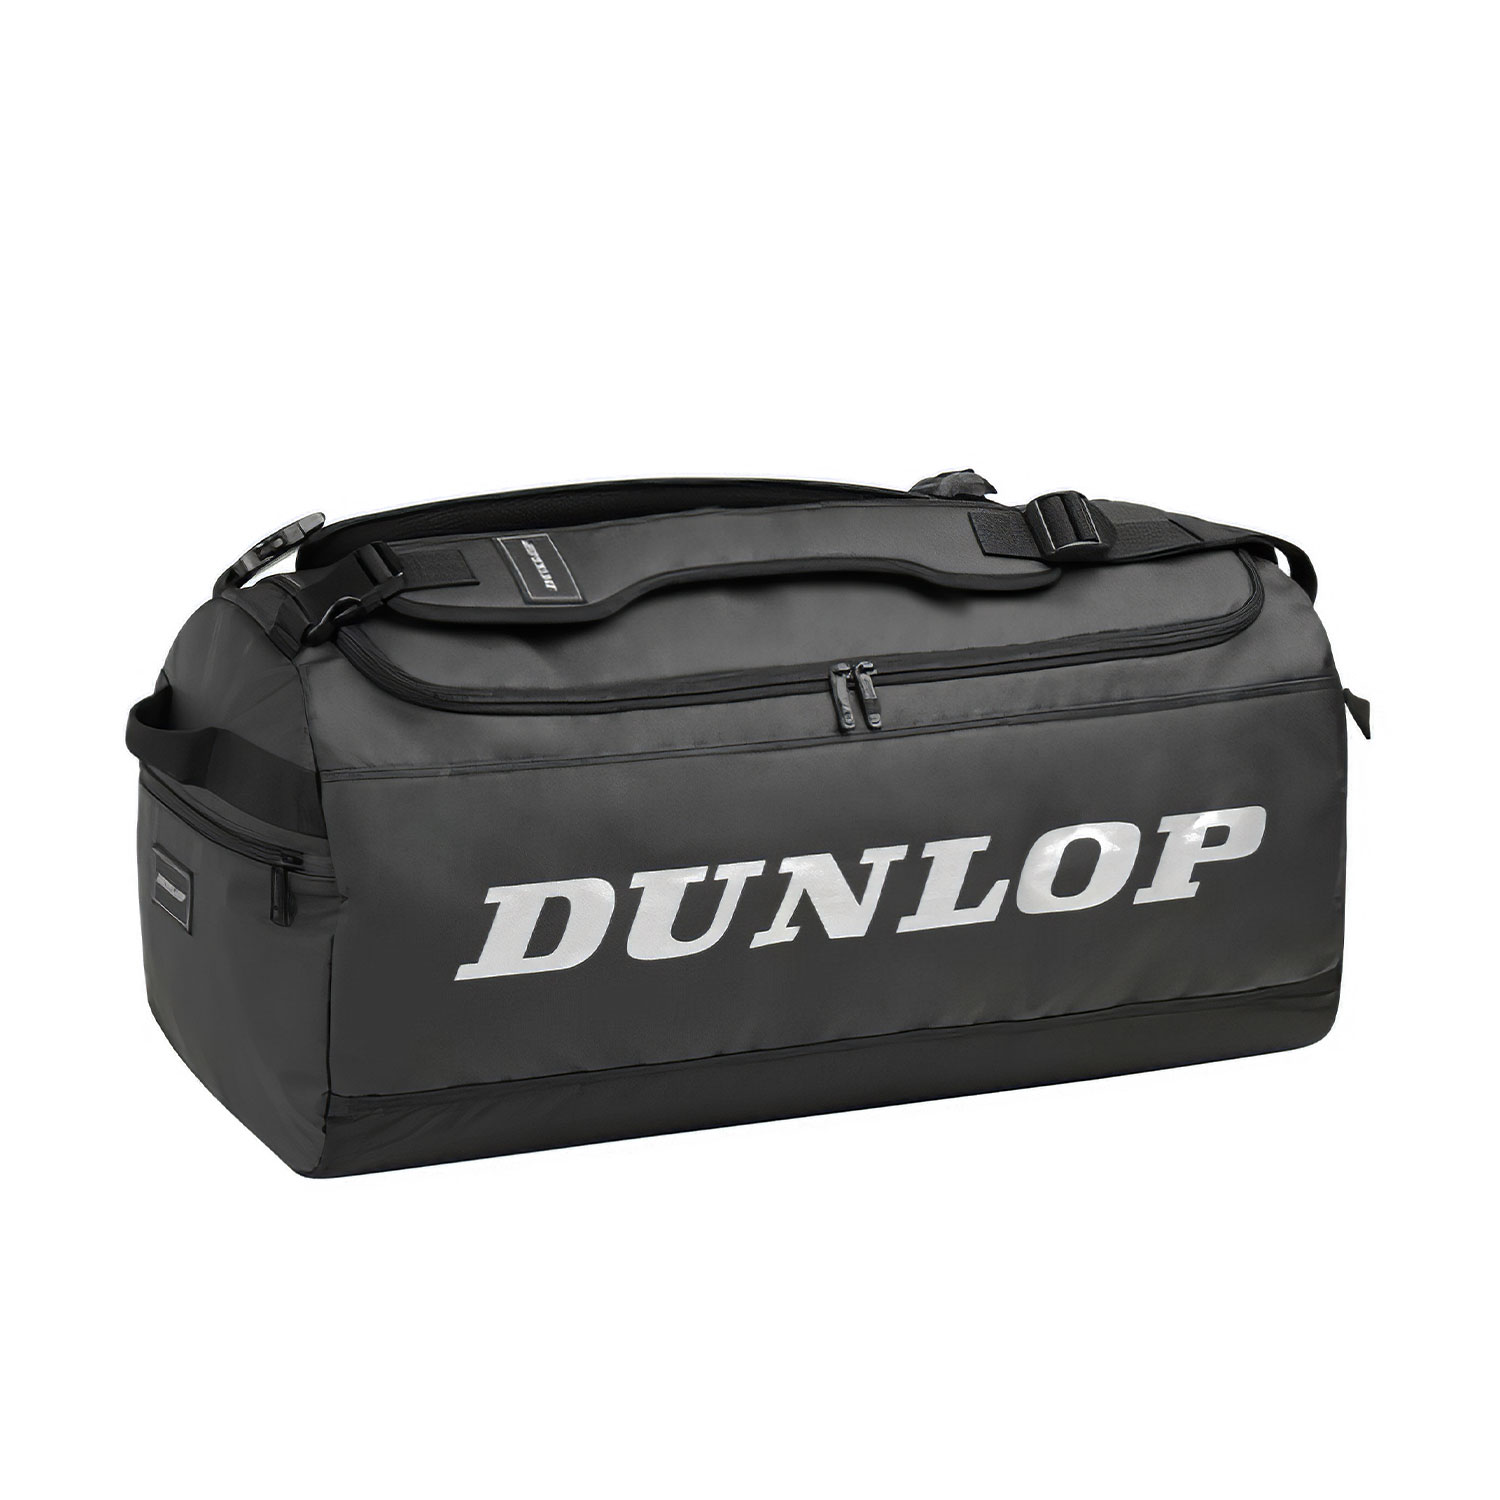 Dunlop Pro Duffle - Black